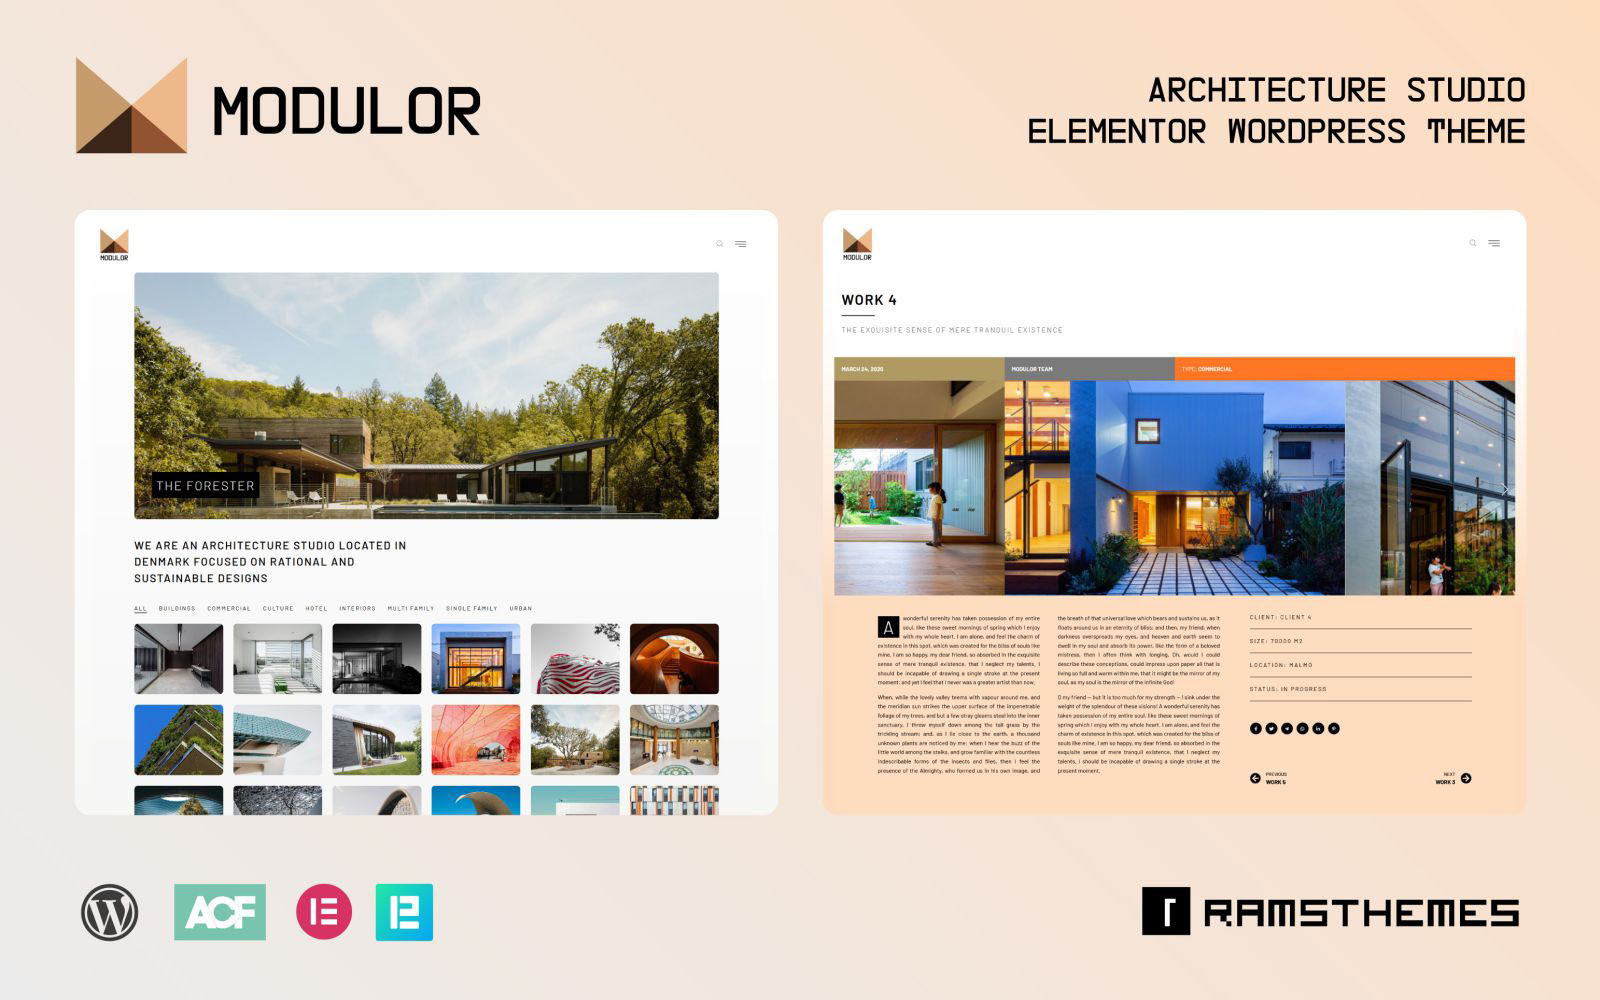 MODULOR - Architecture Studio WordPress Theme